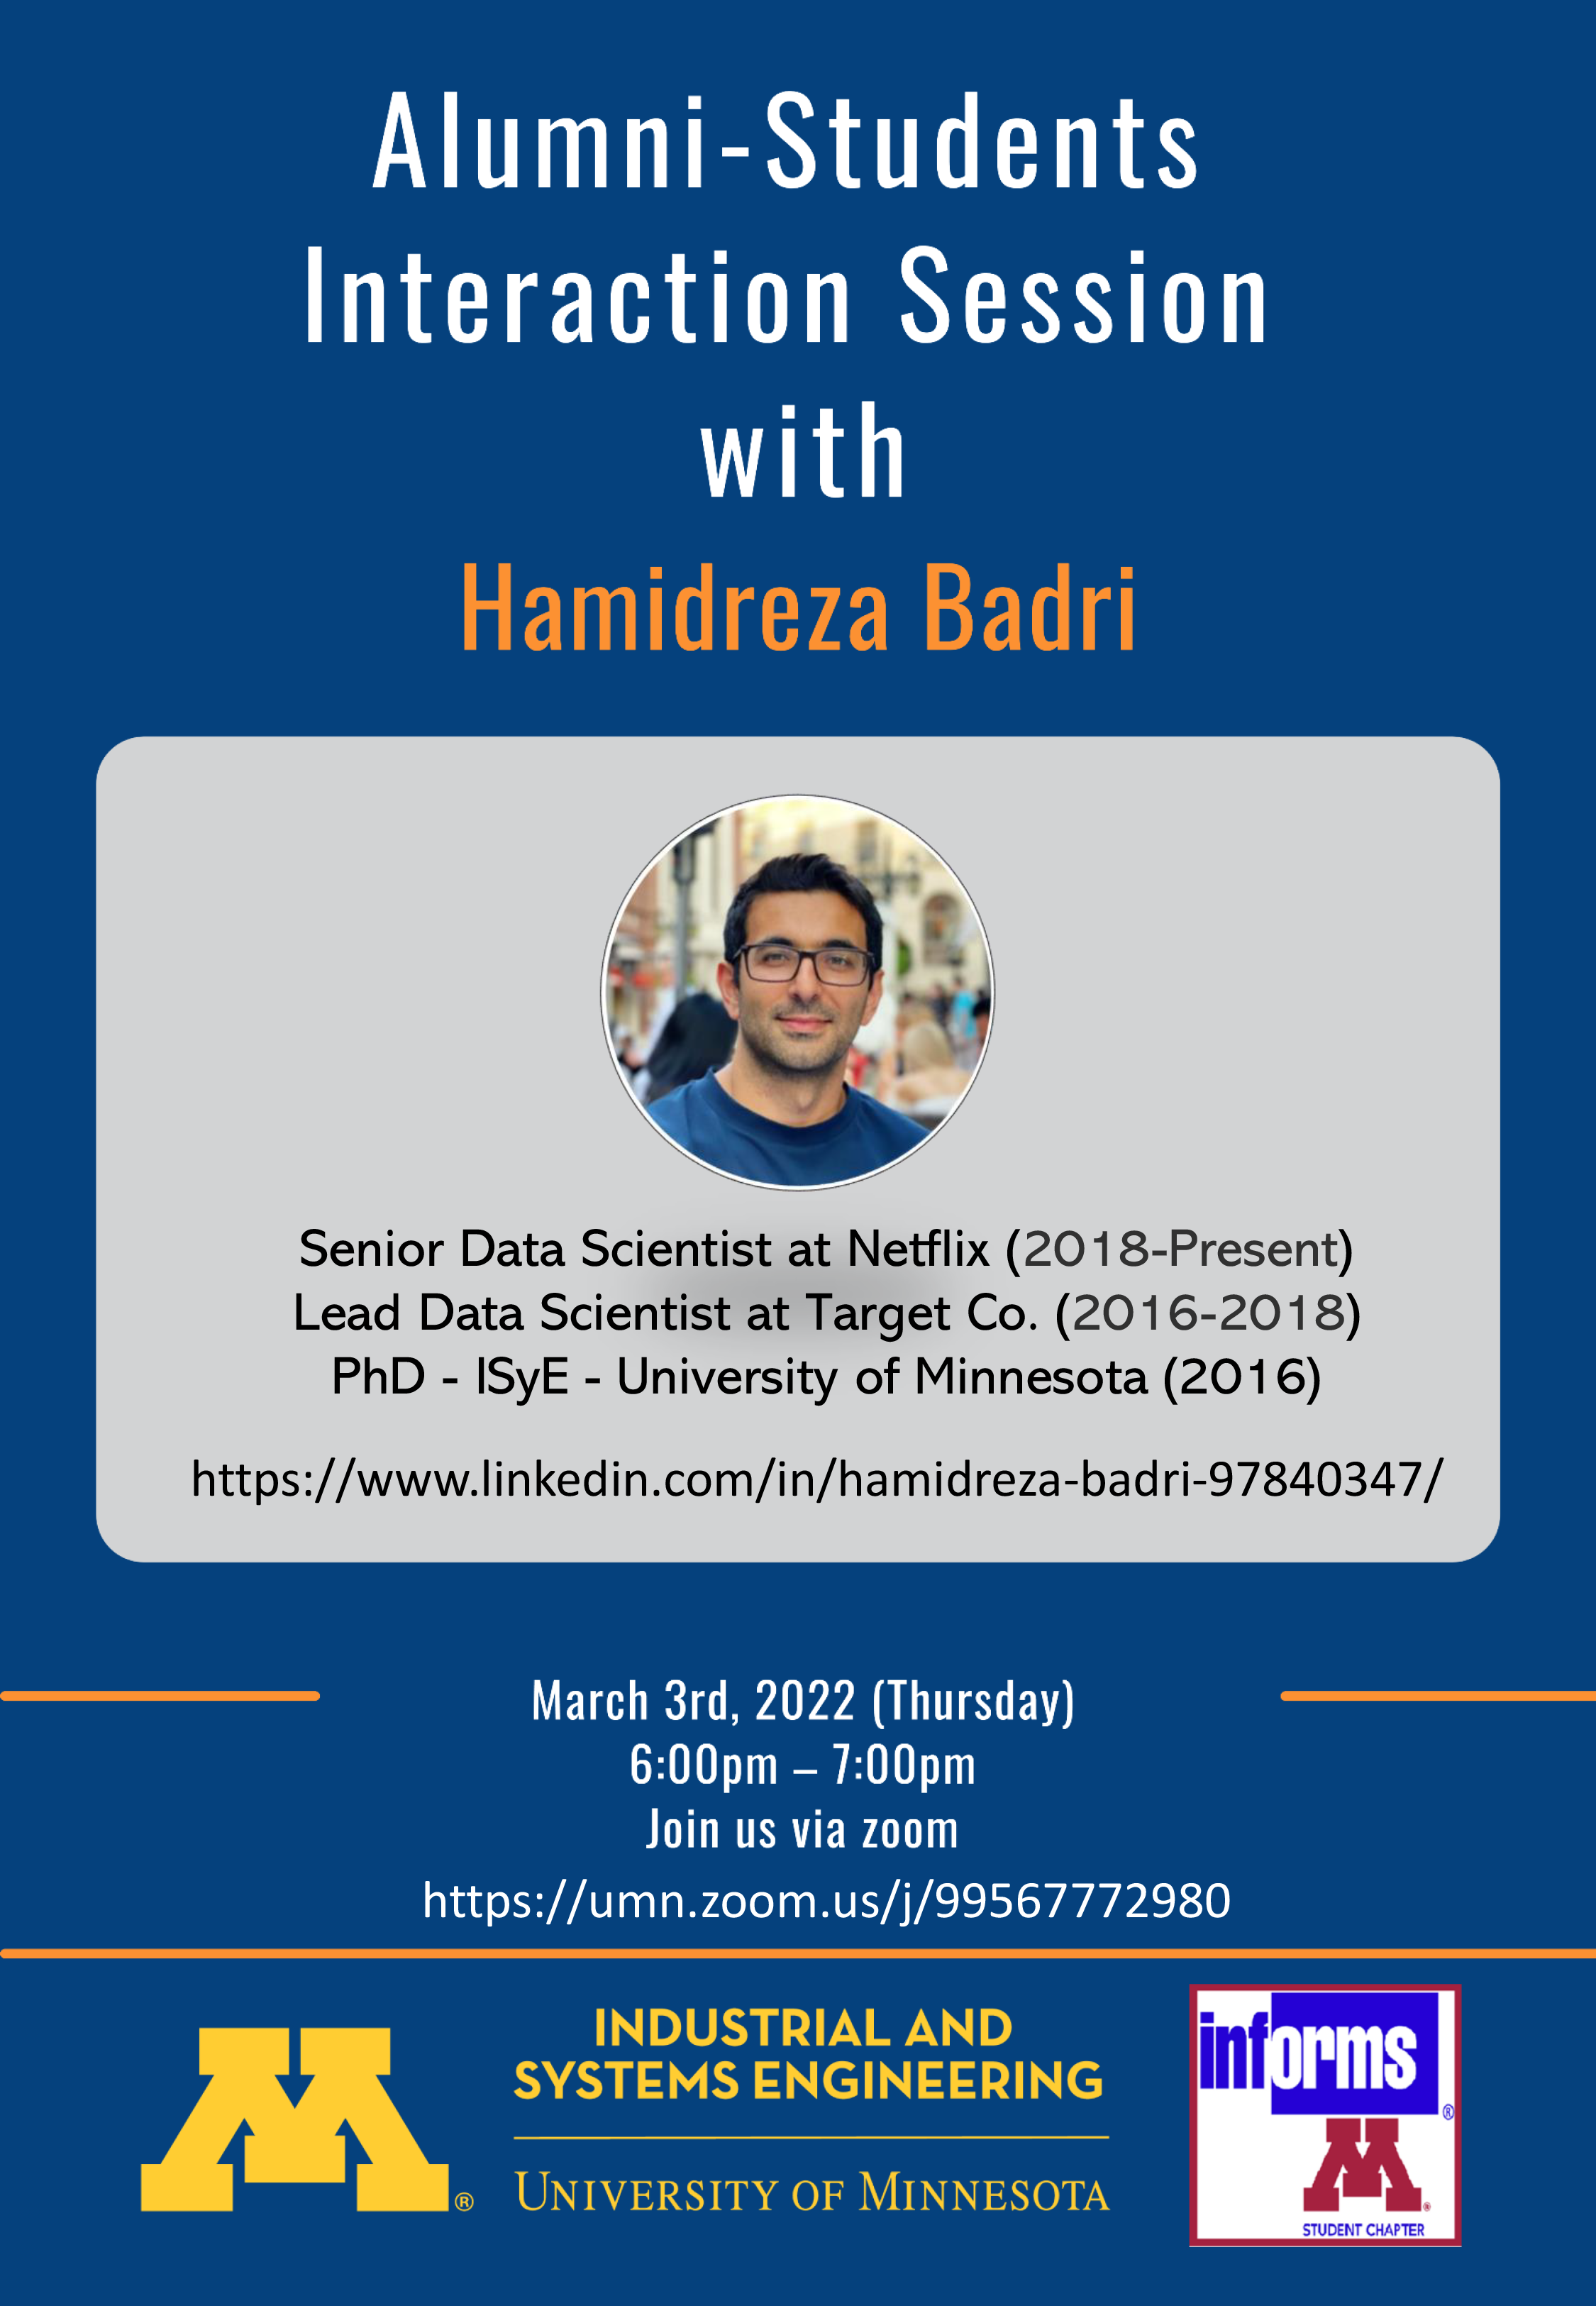 Hamidreza Badri Alumni Student event